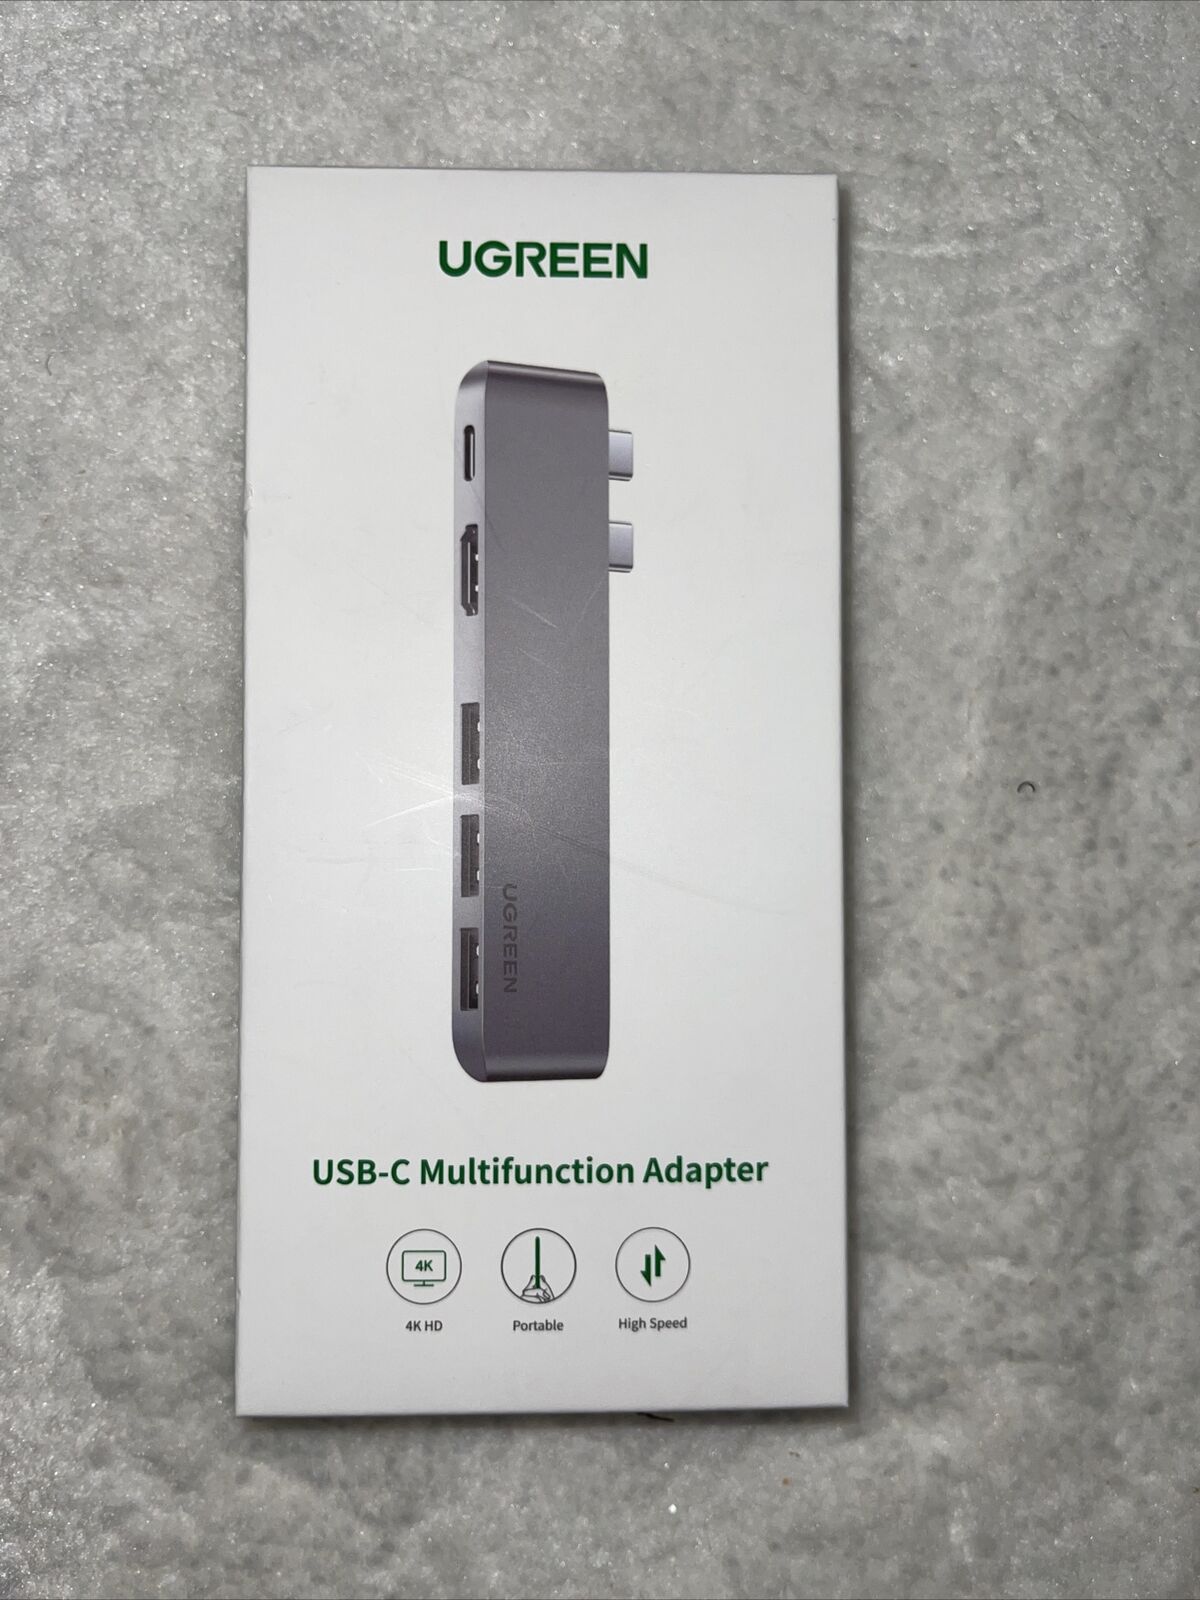 UGreen USB-C Multifunction Adapter Model CM251